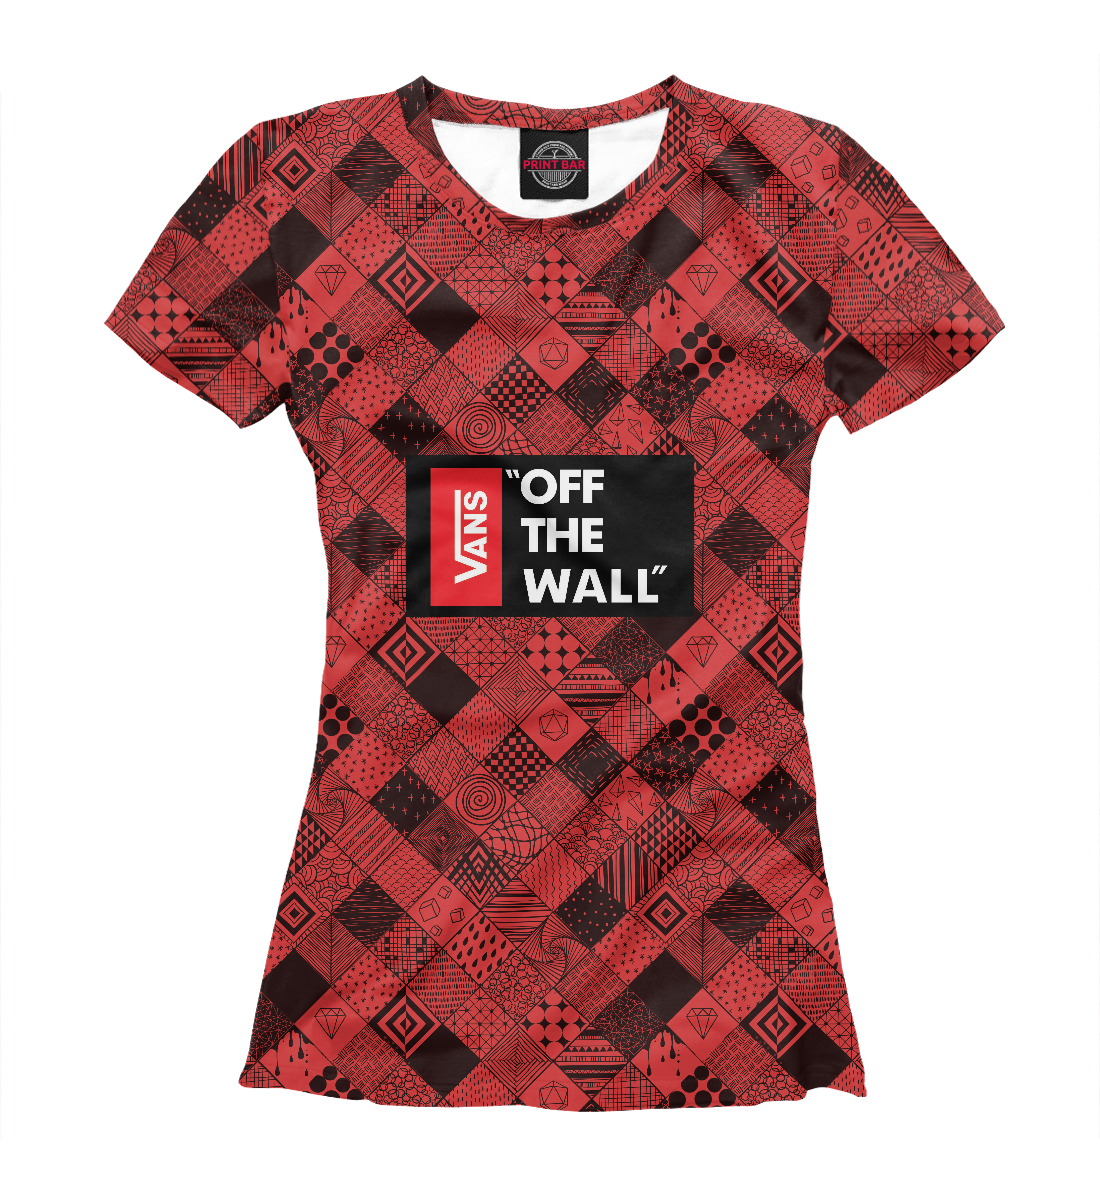 Футболка Vans of the wall (Red and Black) для женщин, артикул: VAN-495790-fut-1mp